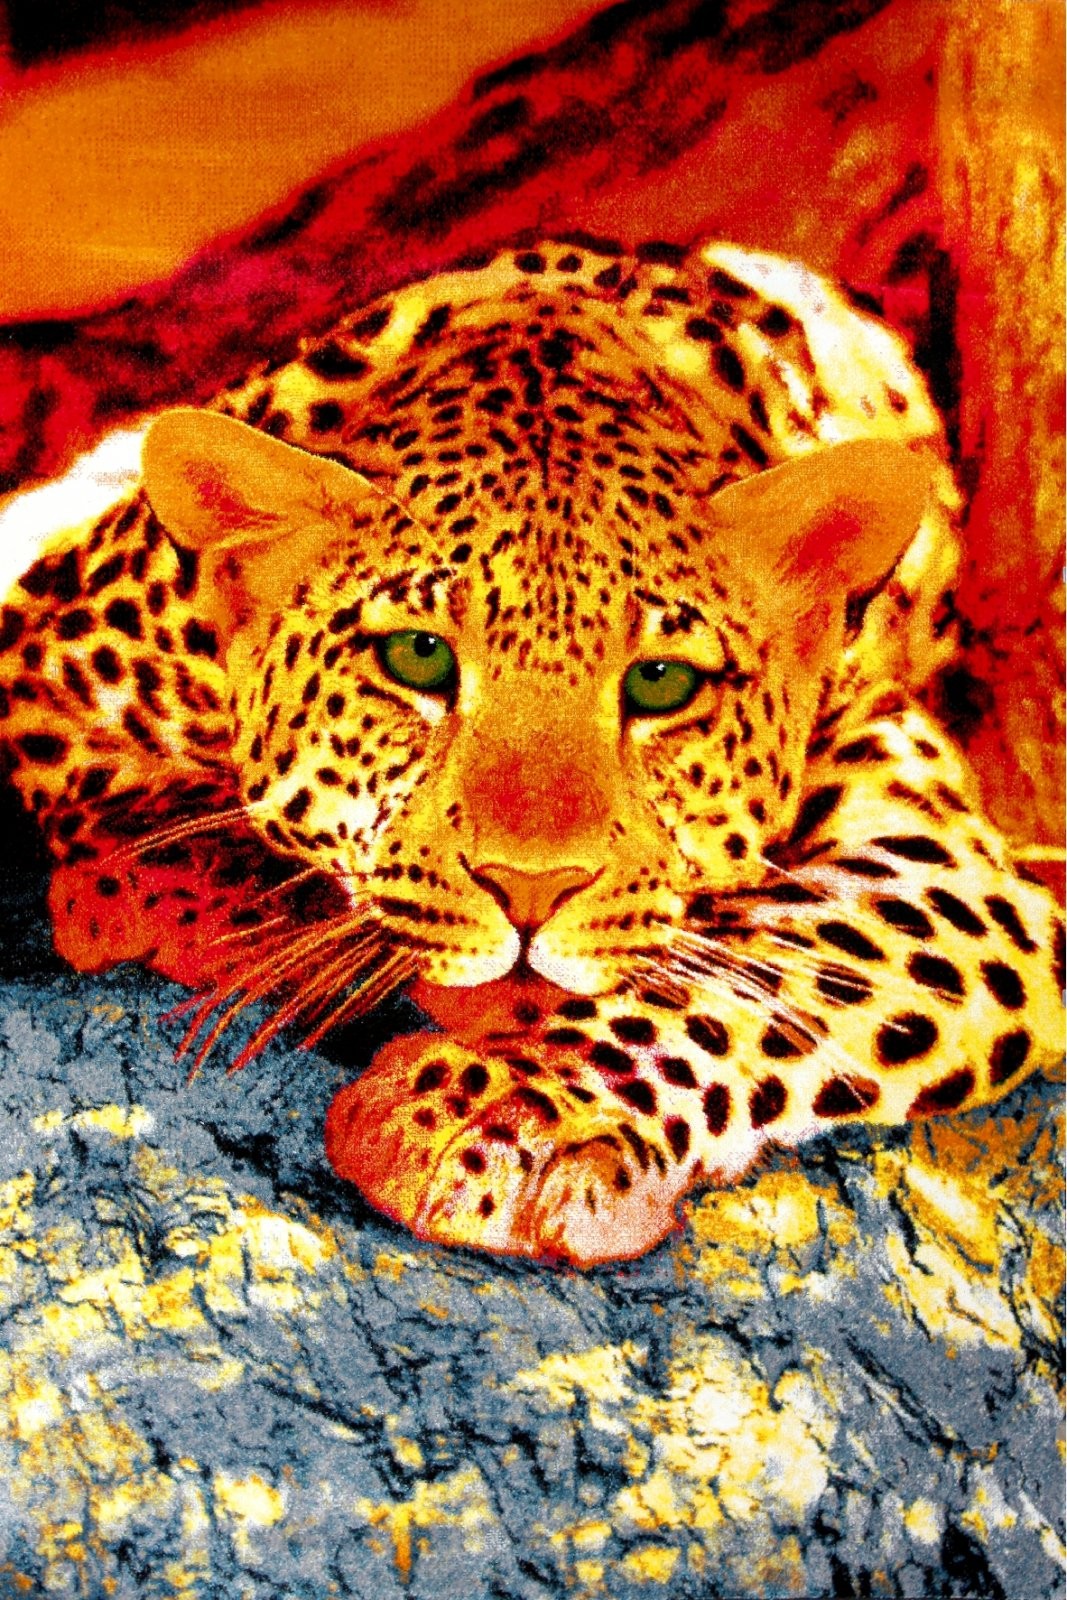 Covor Dreptunghiular, 200 x 300 cm, Multicolor, Kolibri Leopard 11123